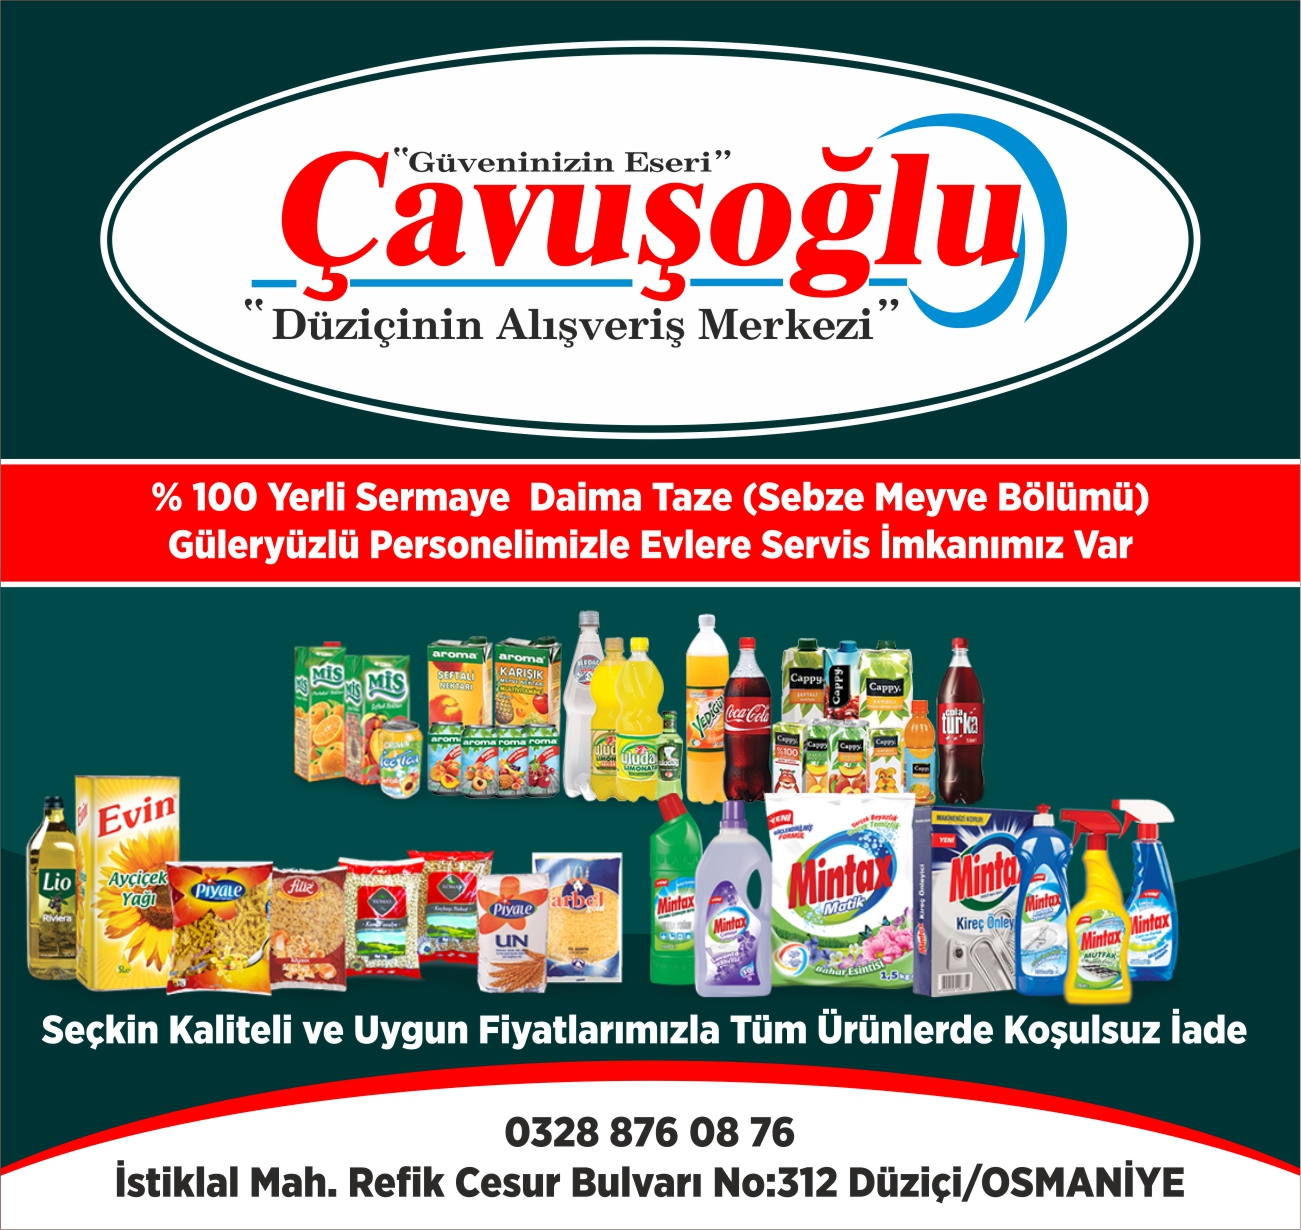 cavusoglu-avm-market-duzici